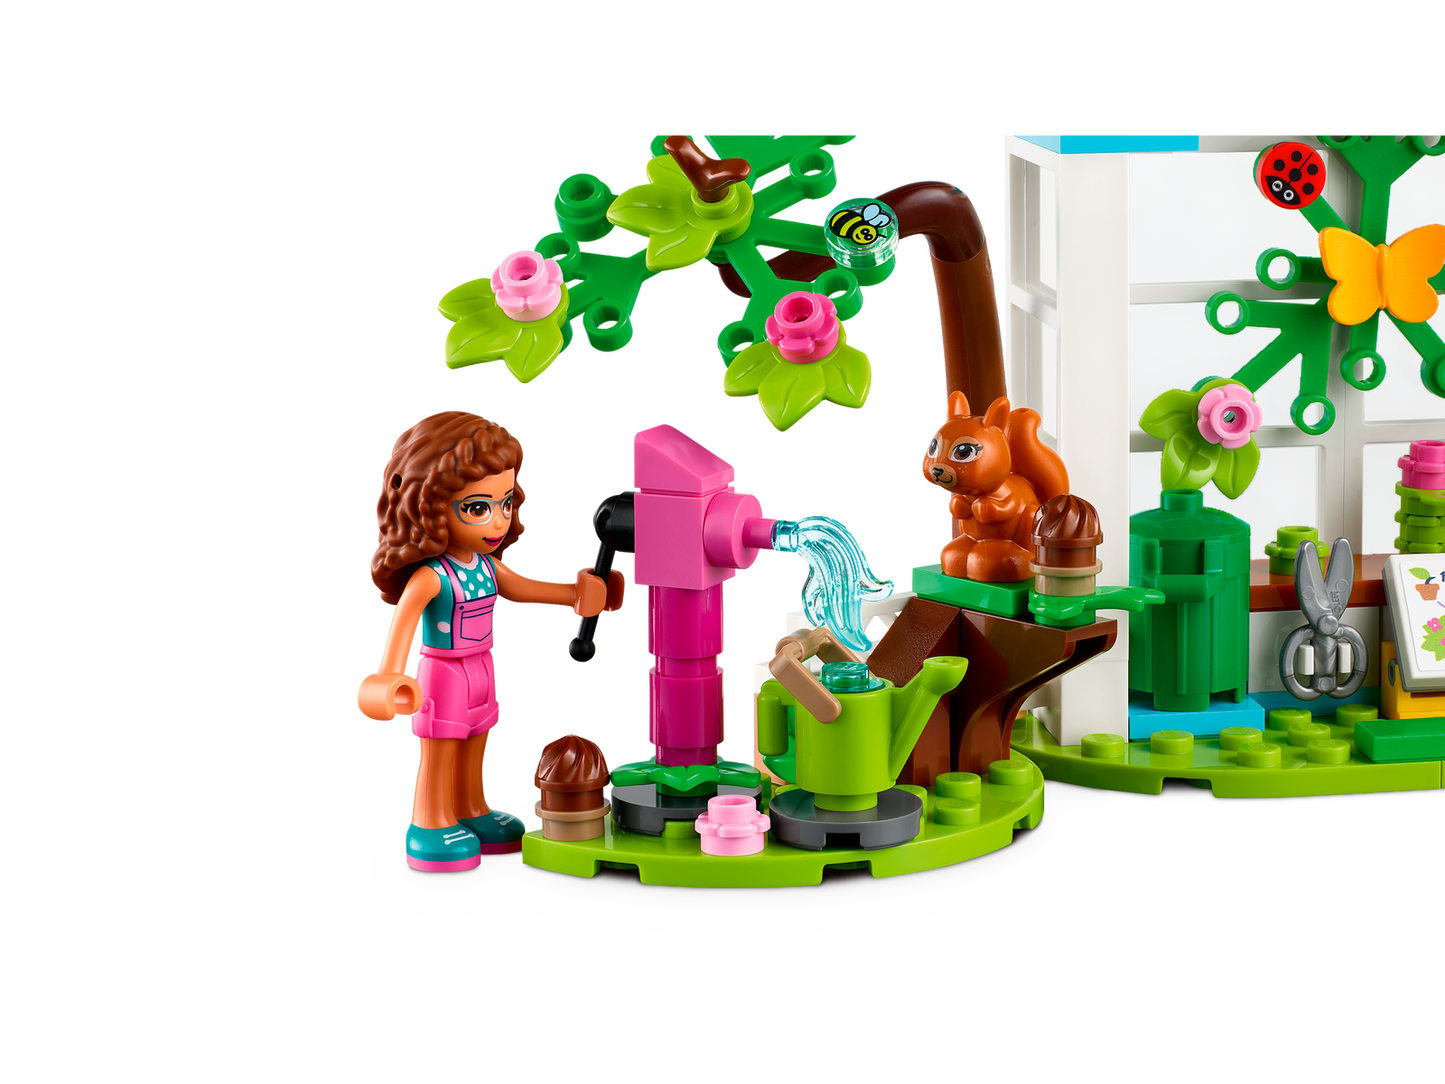 LEGO Friends Tree-Planting Vehicle 41707